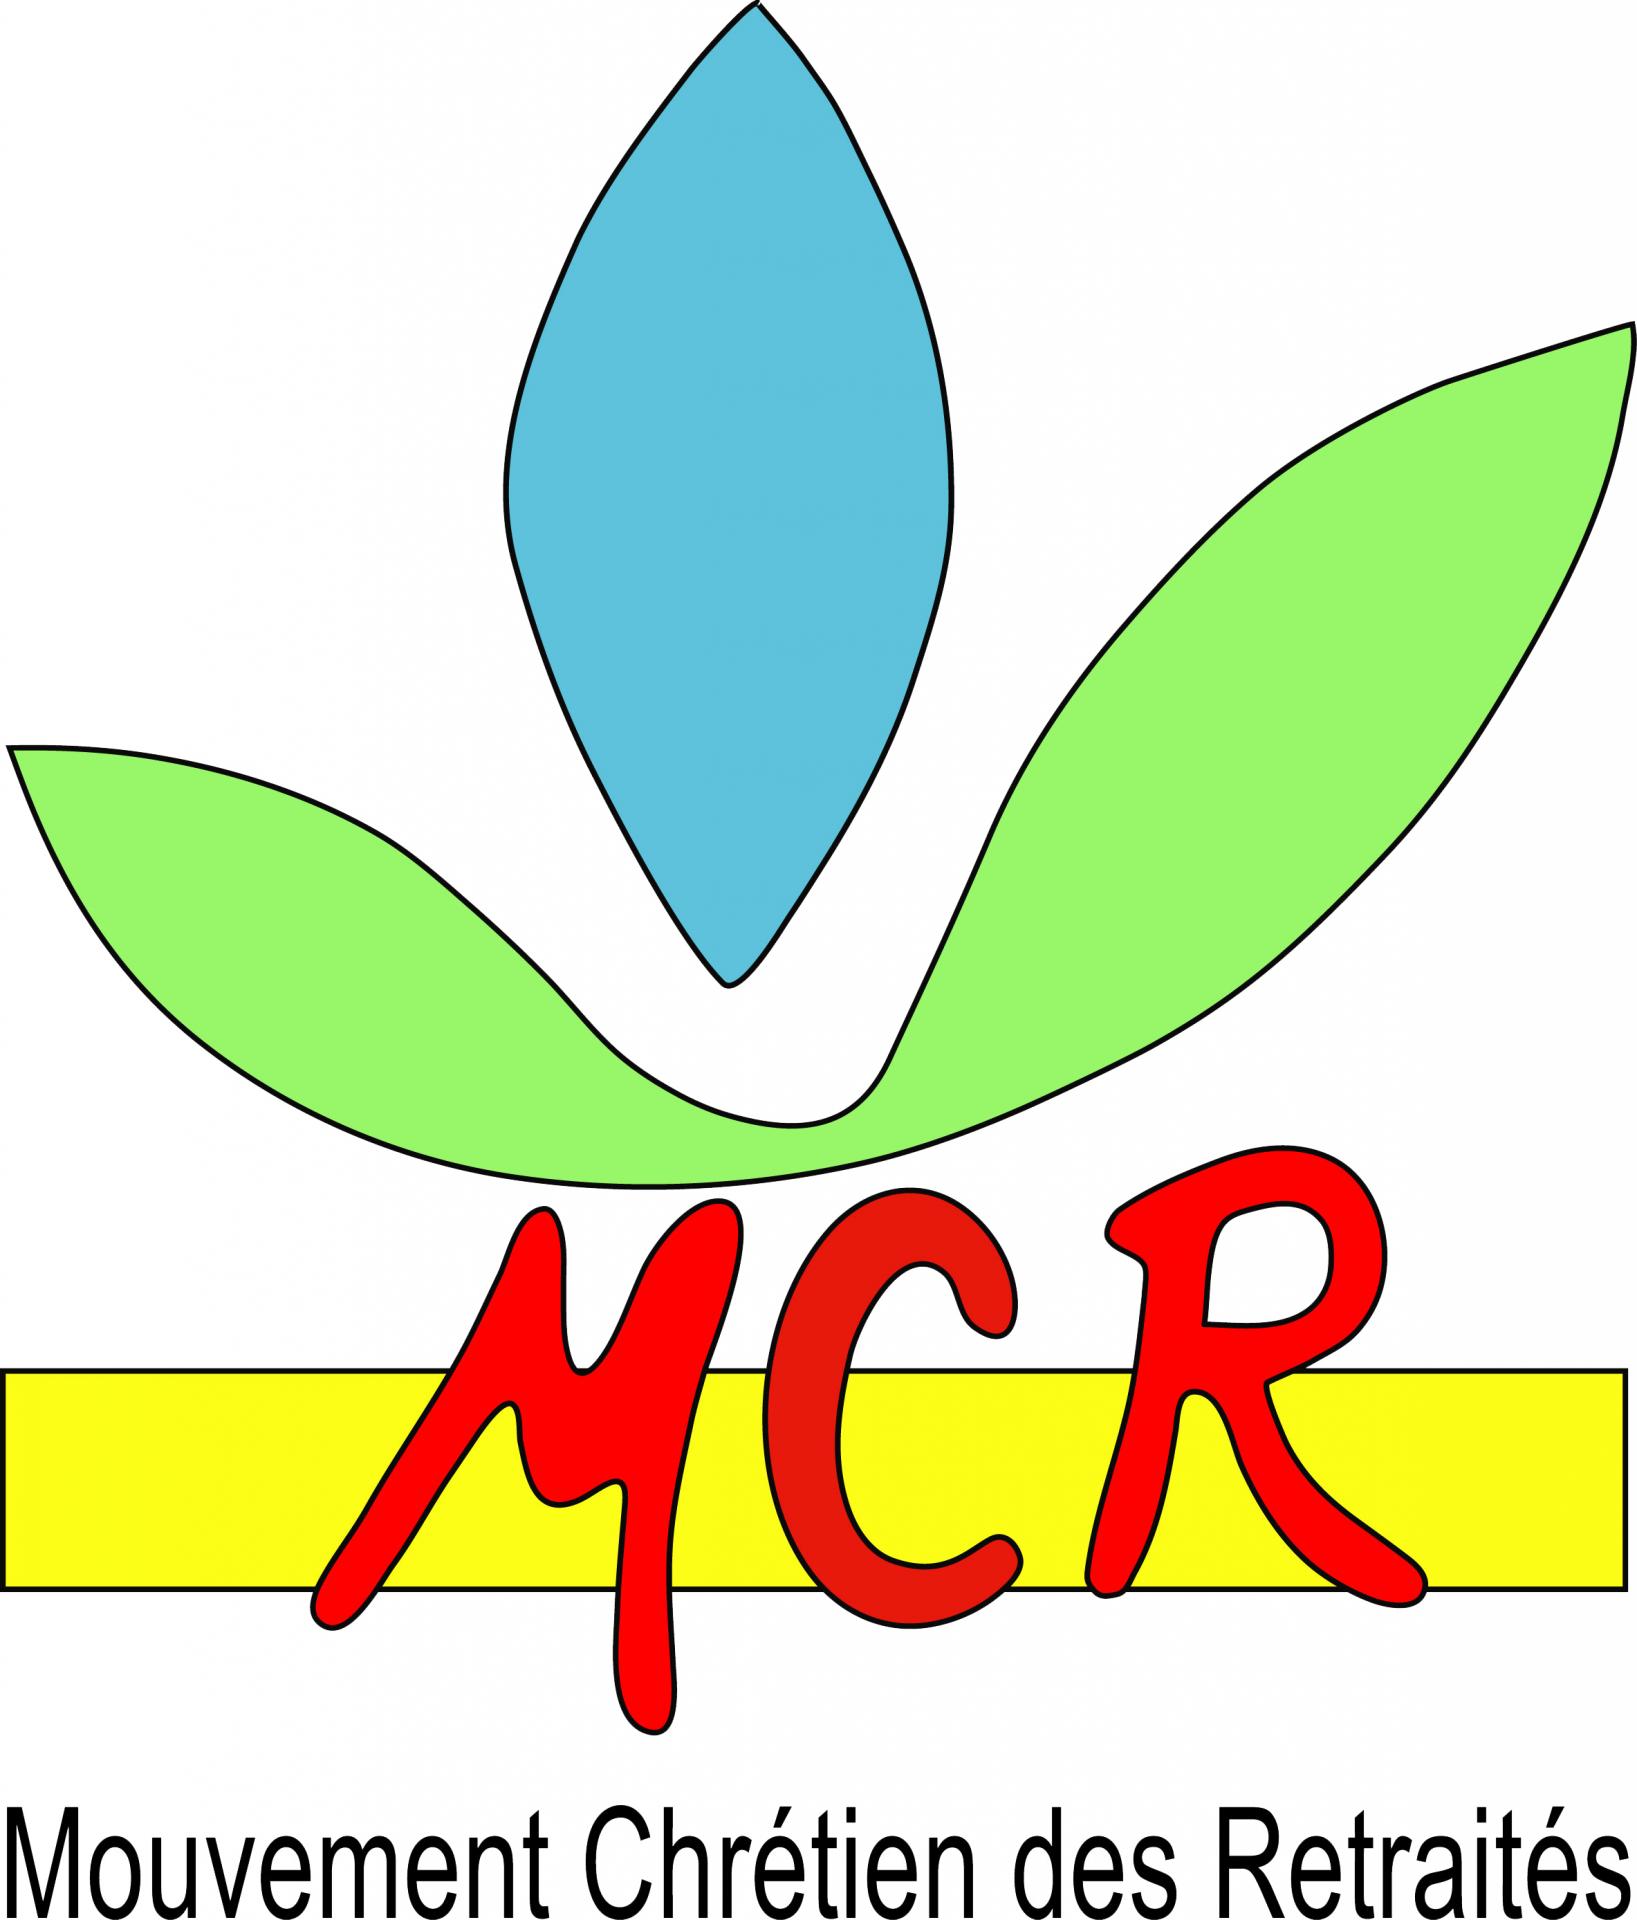 Mcr logo